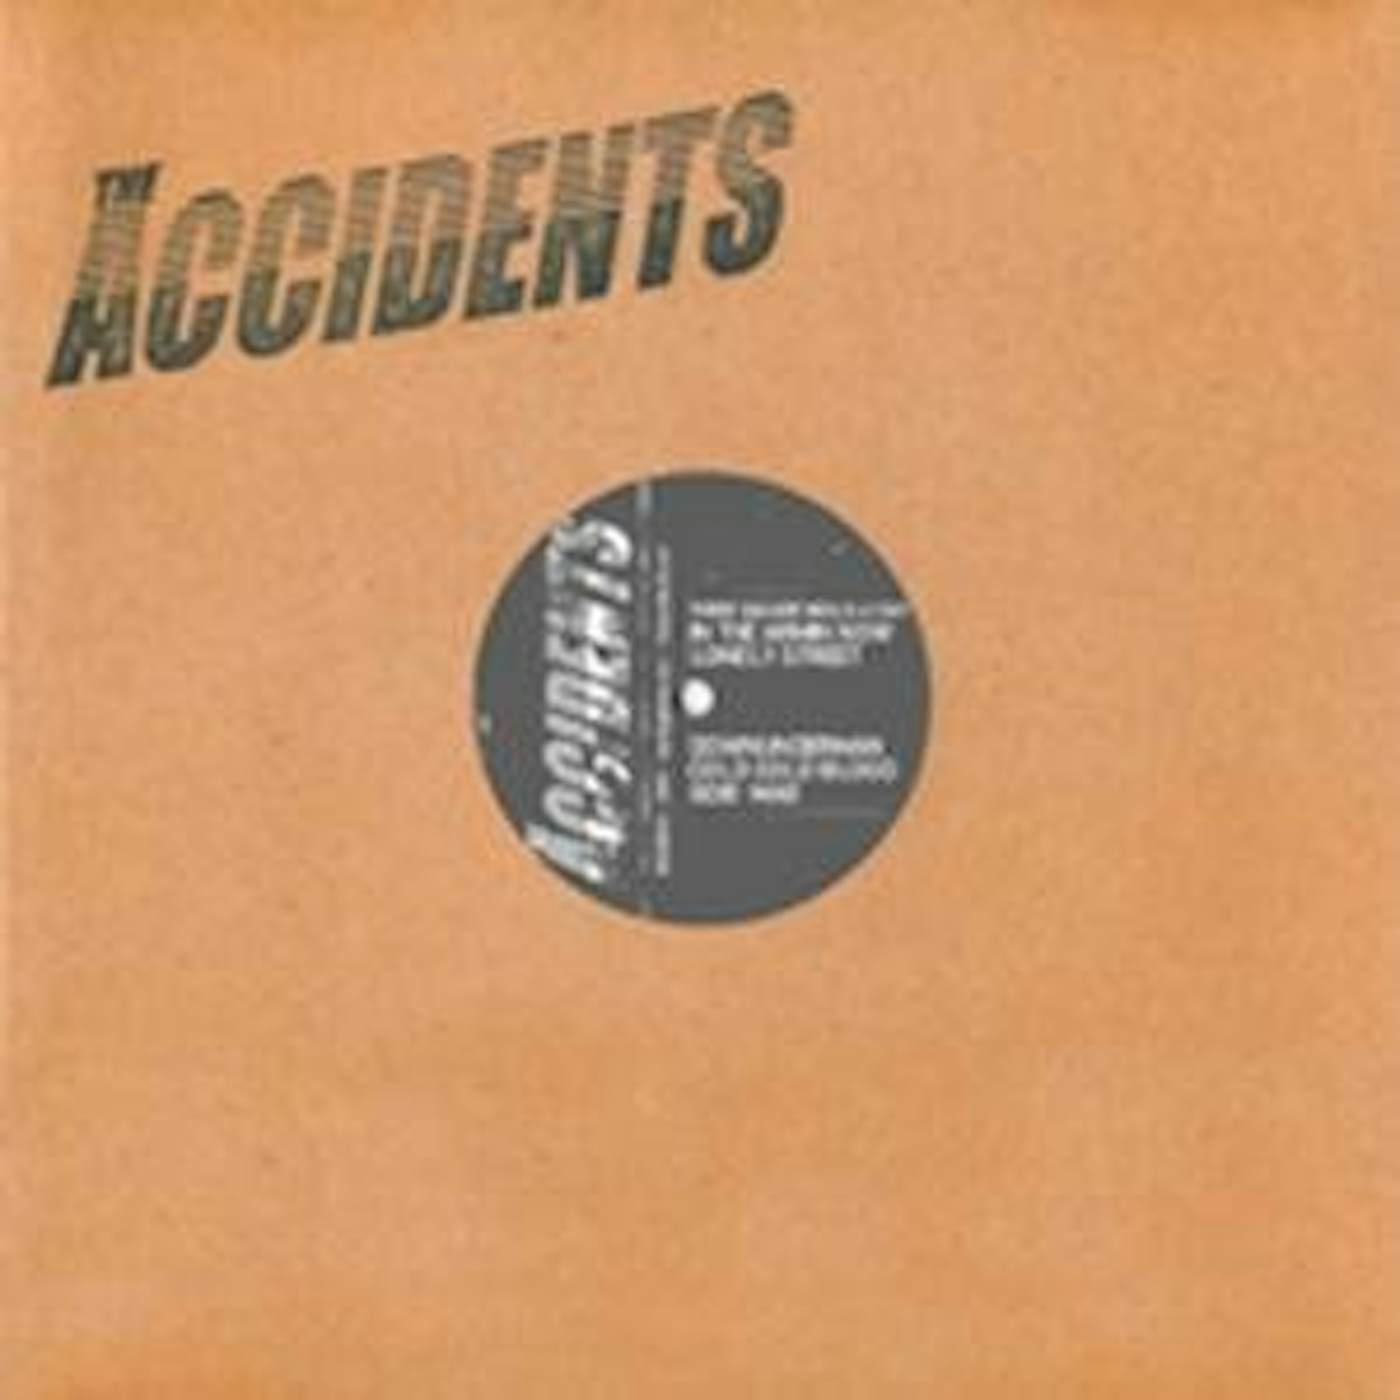 Accidents STIGMATA ROCK N ROLLI Vinyl Record